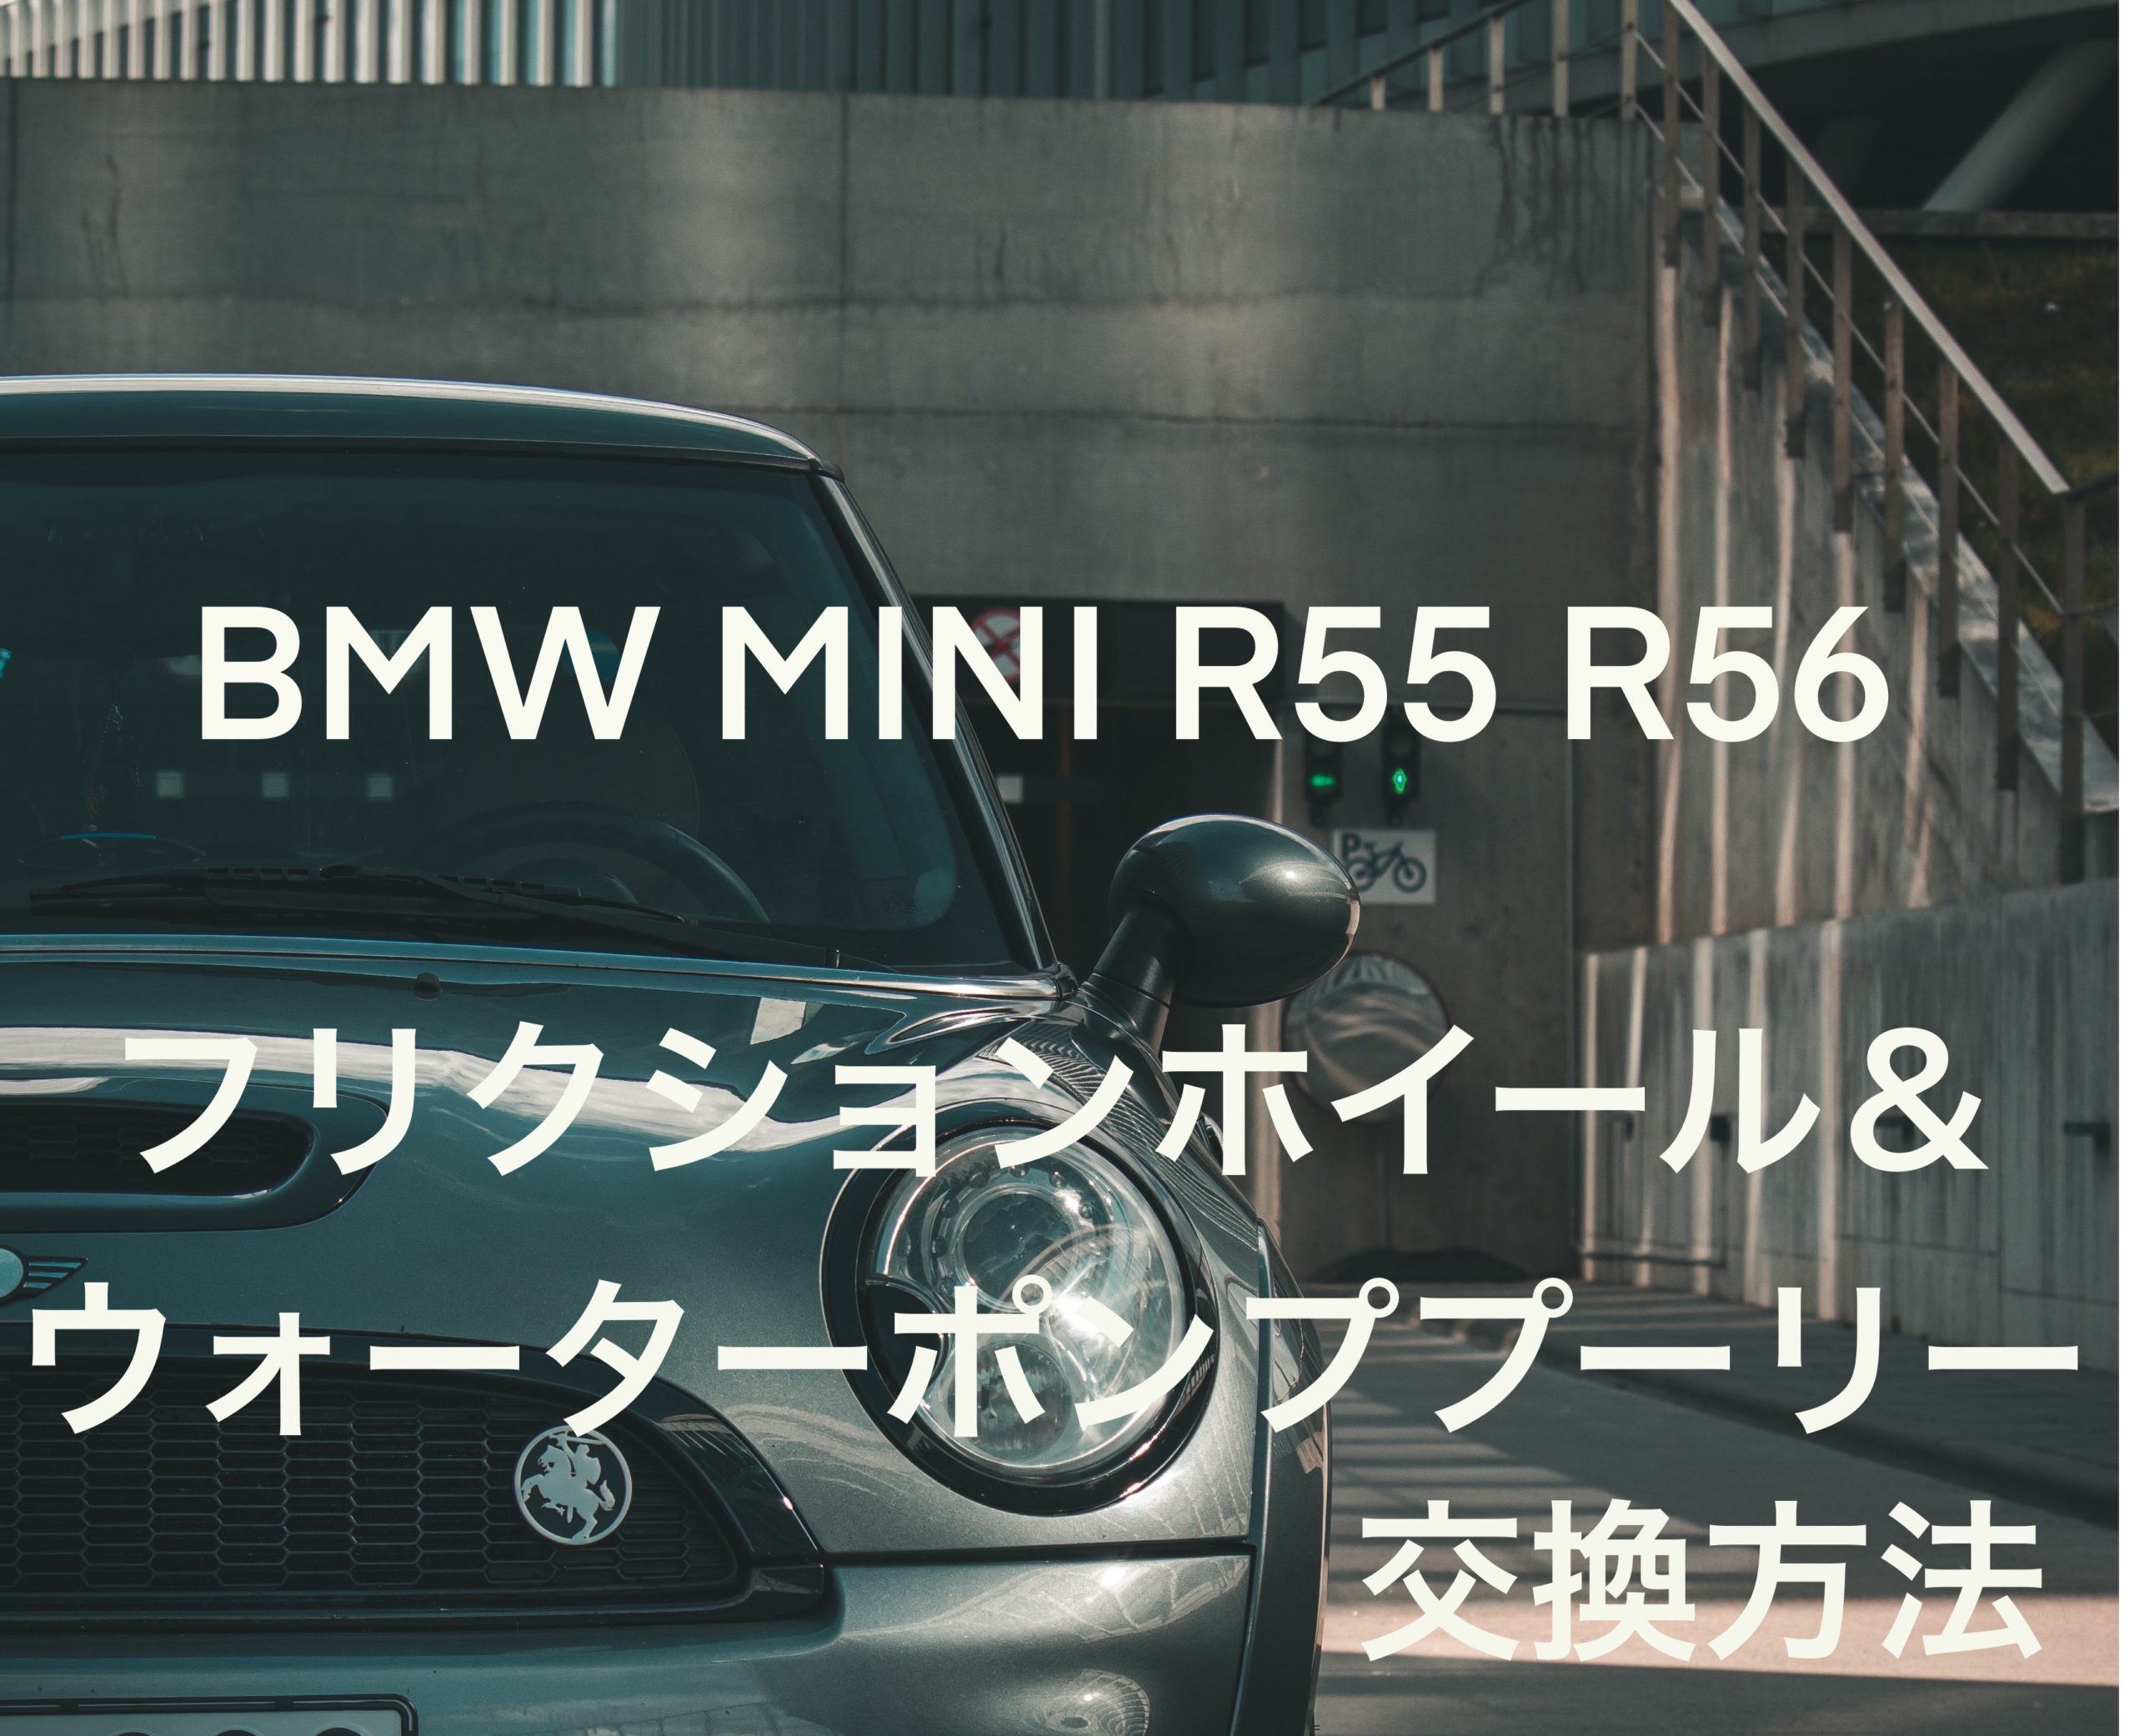 BMW MINI R56 シリーズ ウォーターポンププーリー＆フリクションホイール交換方法 これは狭い